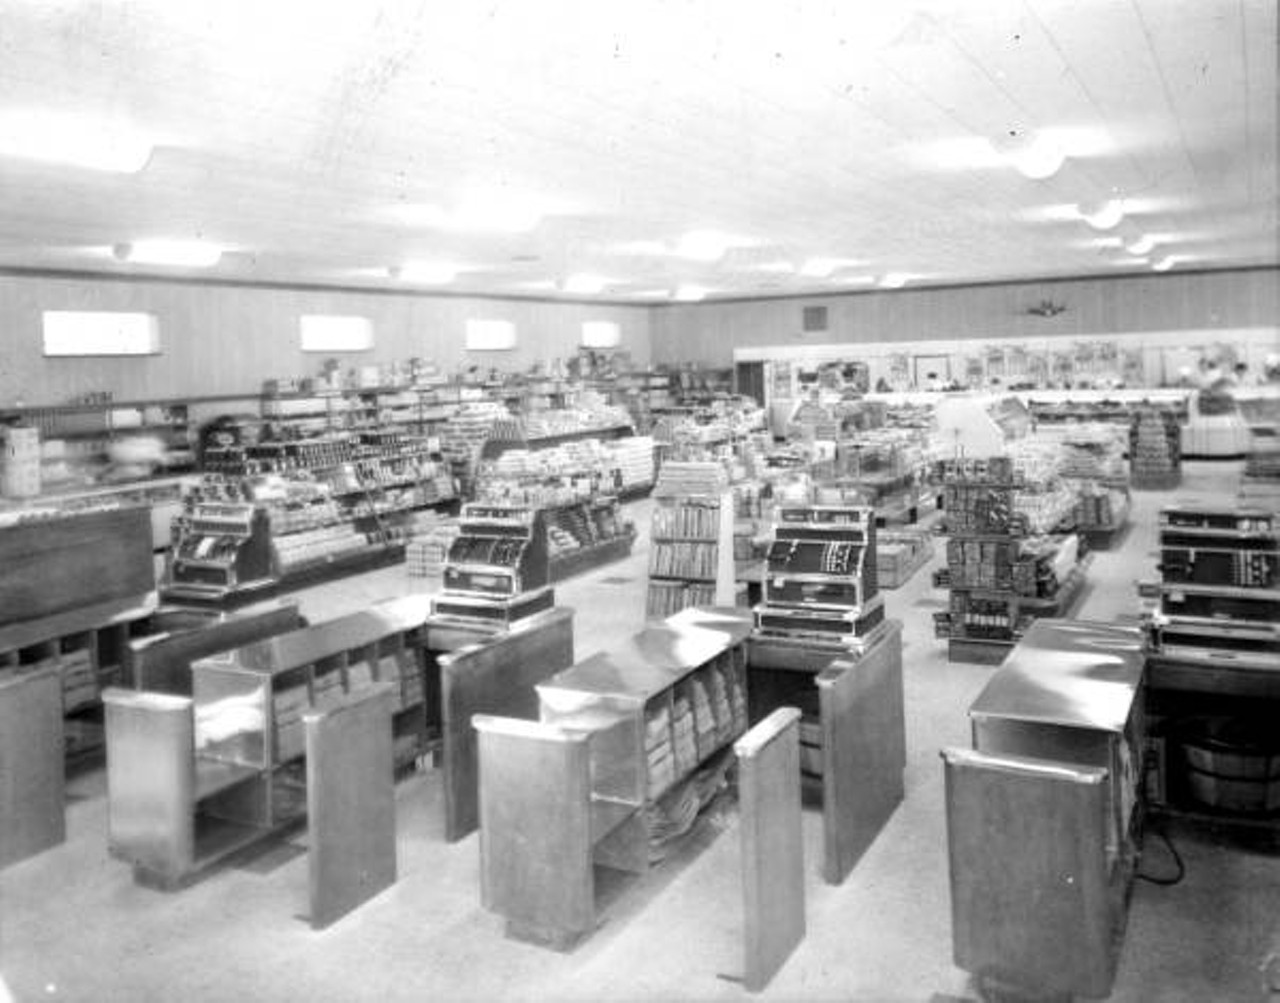 First Publix super market - Winter Haven, Fla. 1940.